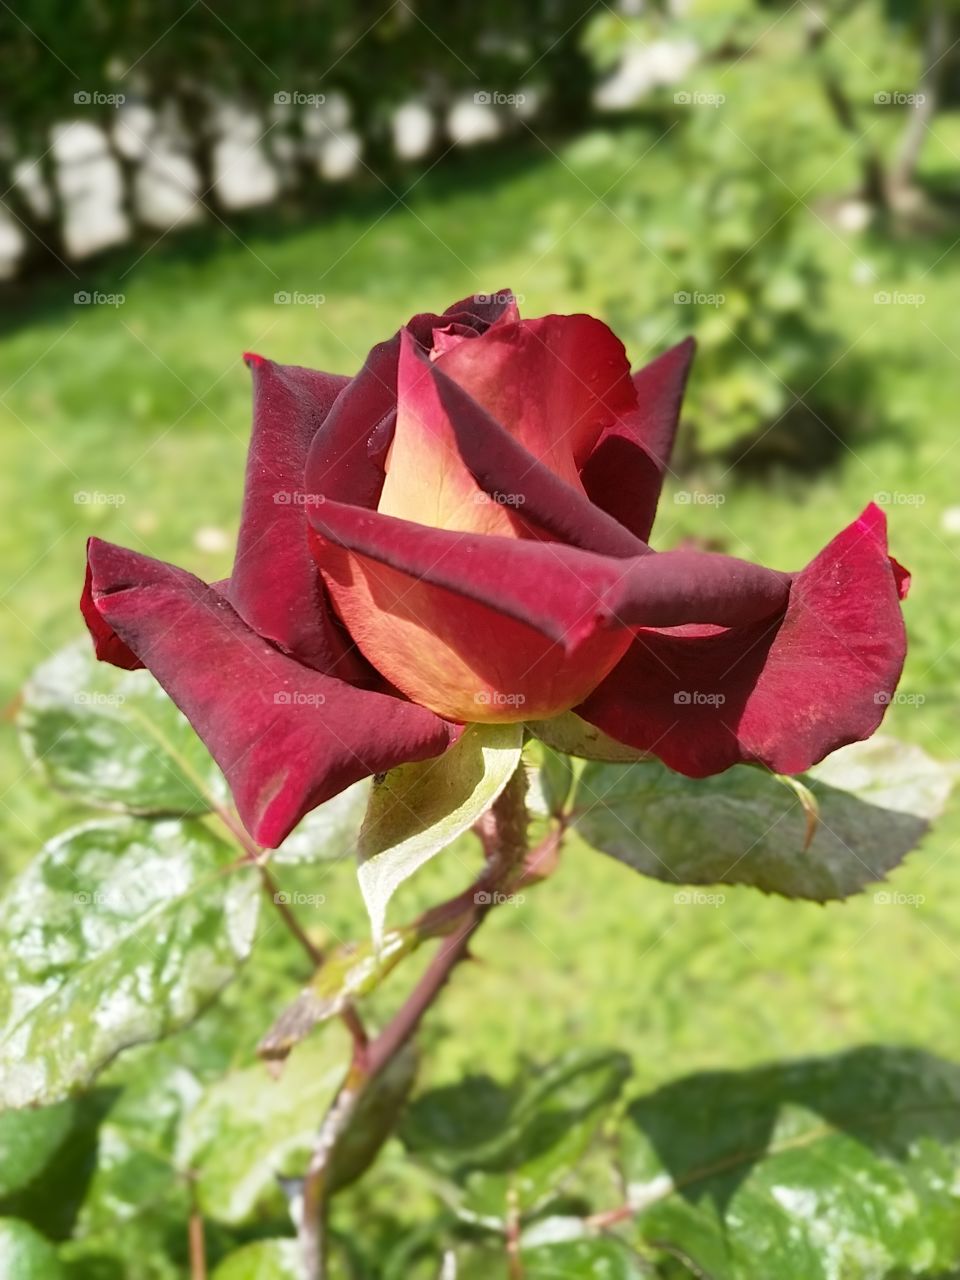 rose in garden